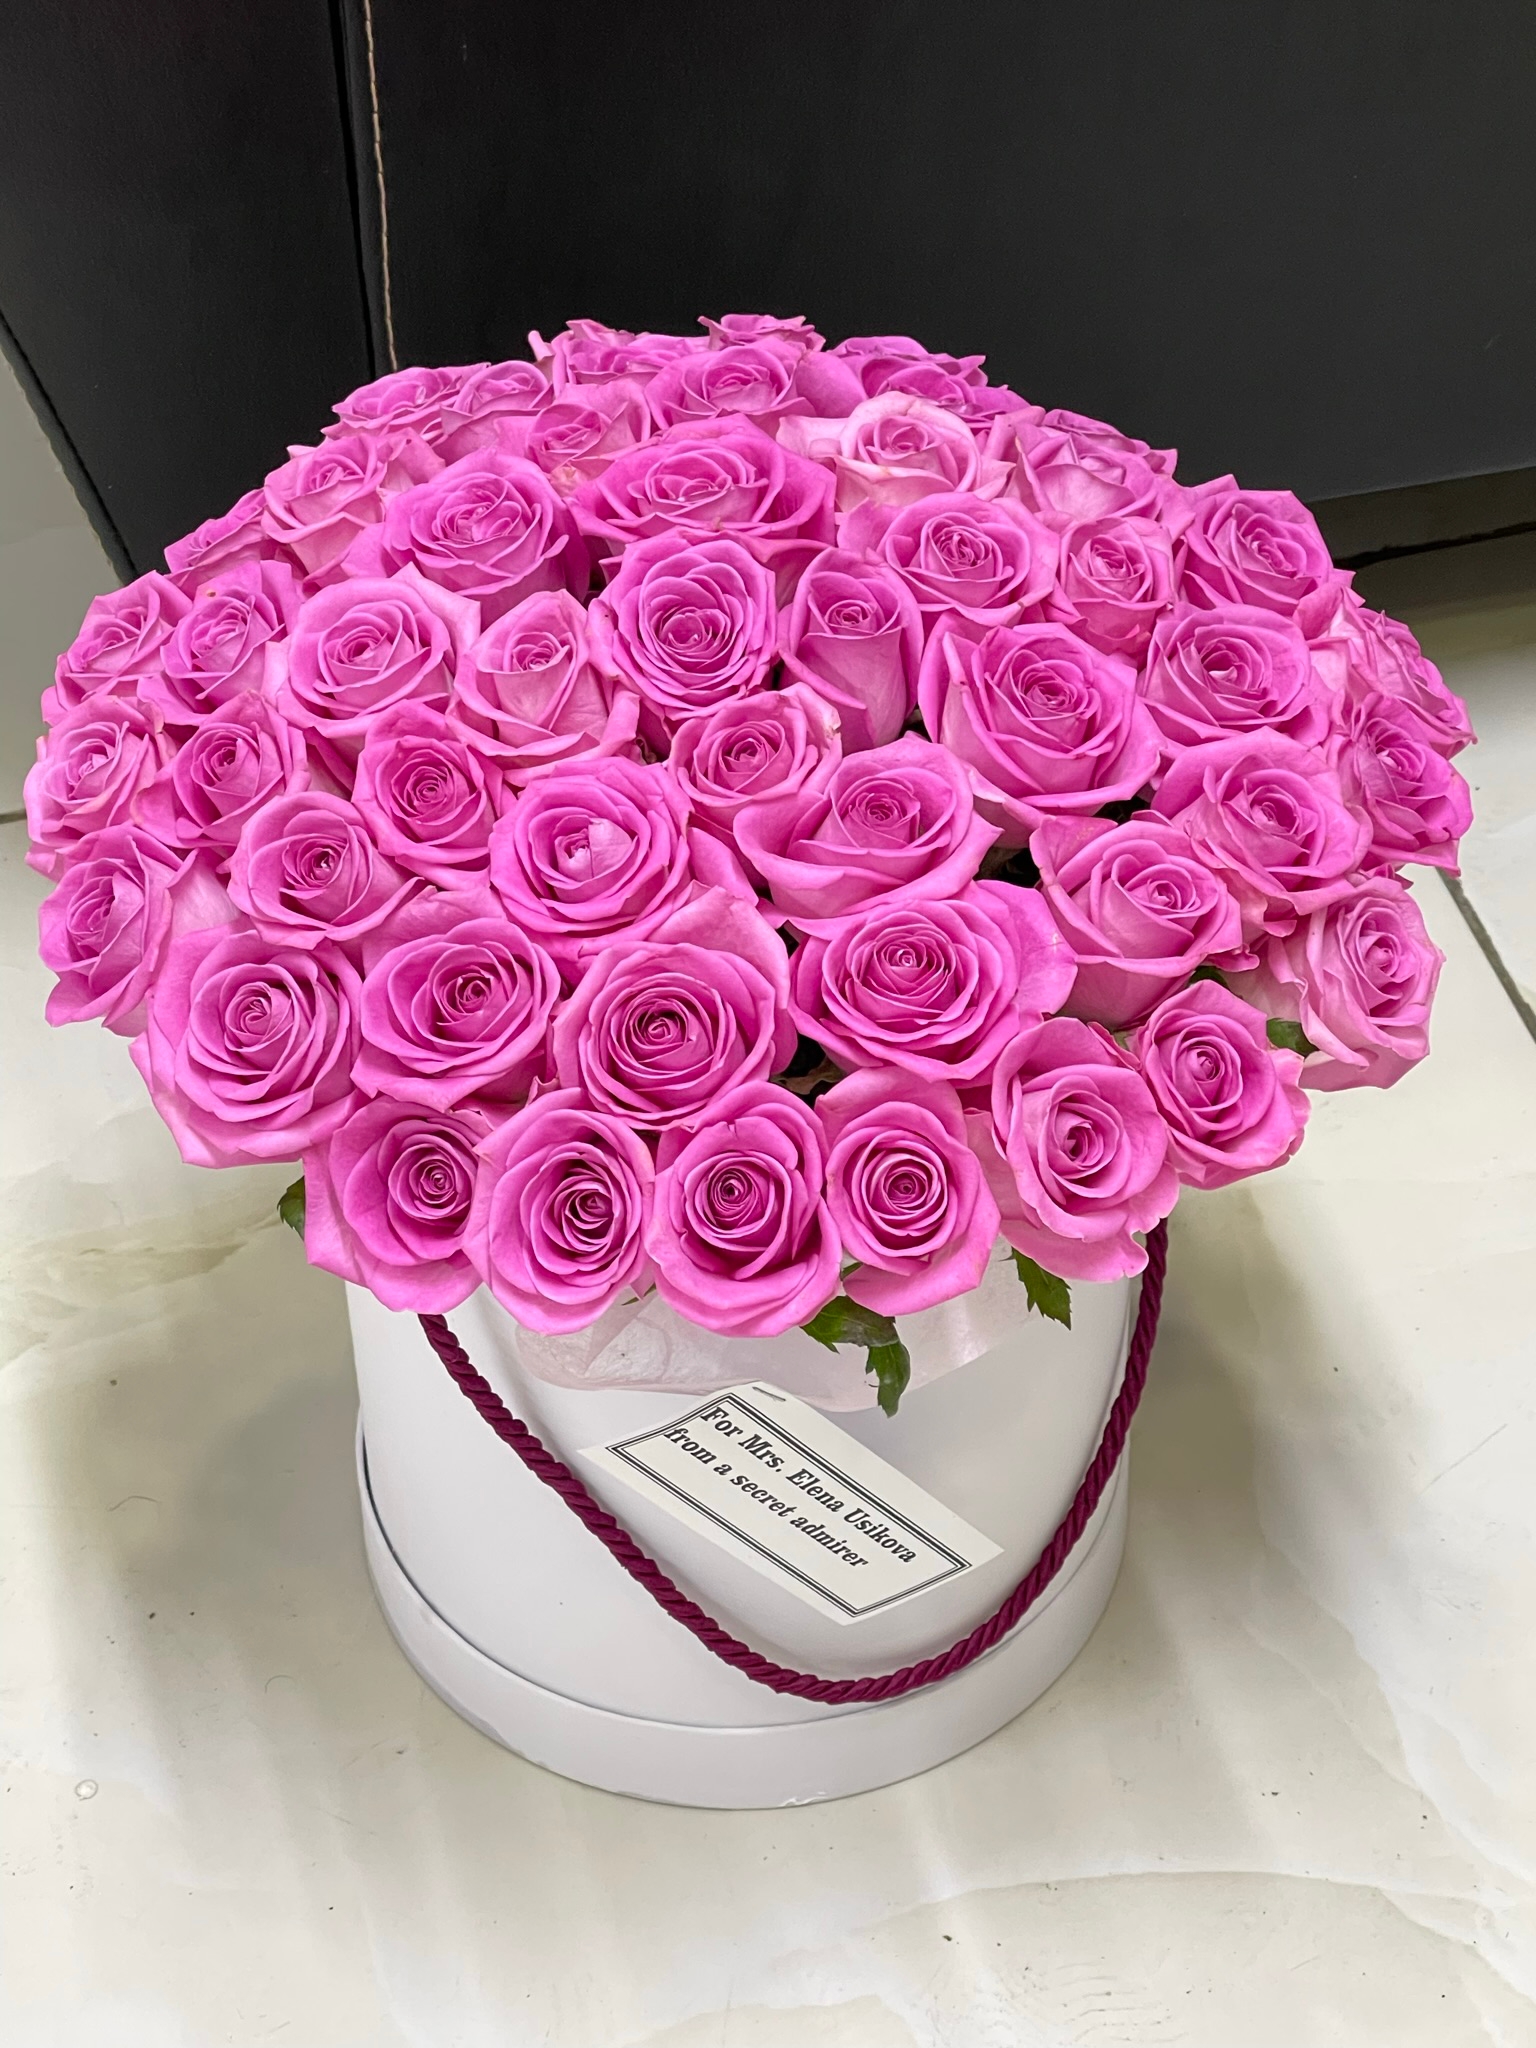  Kemer Flower 51 Pcs Pink Roses in a White Box